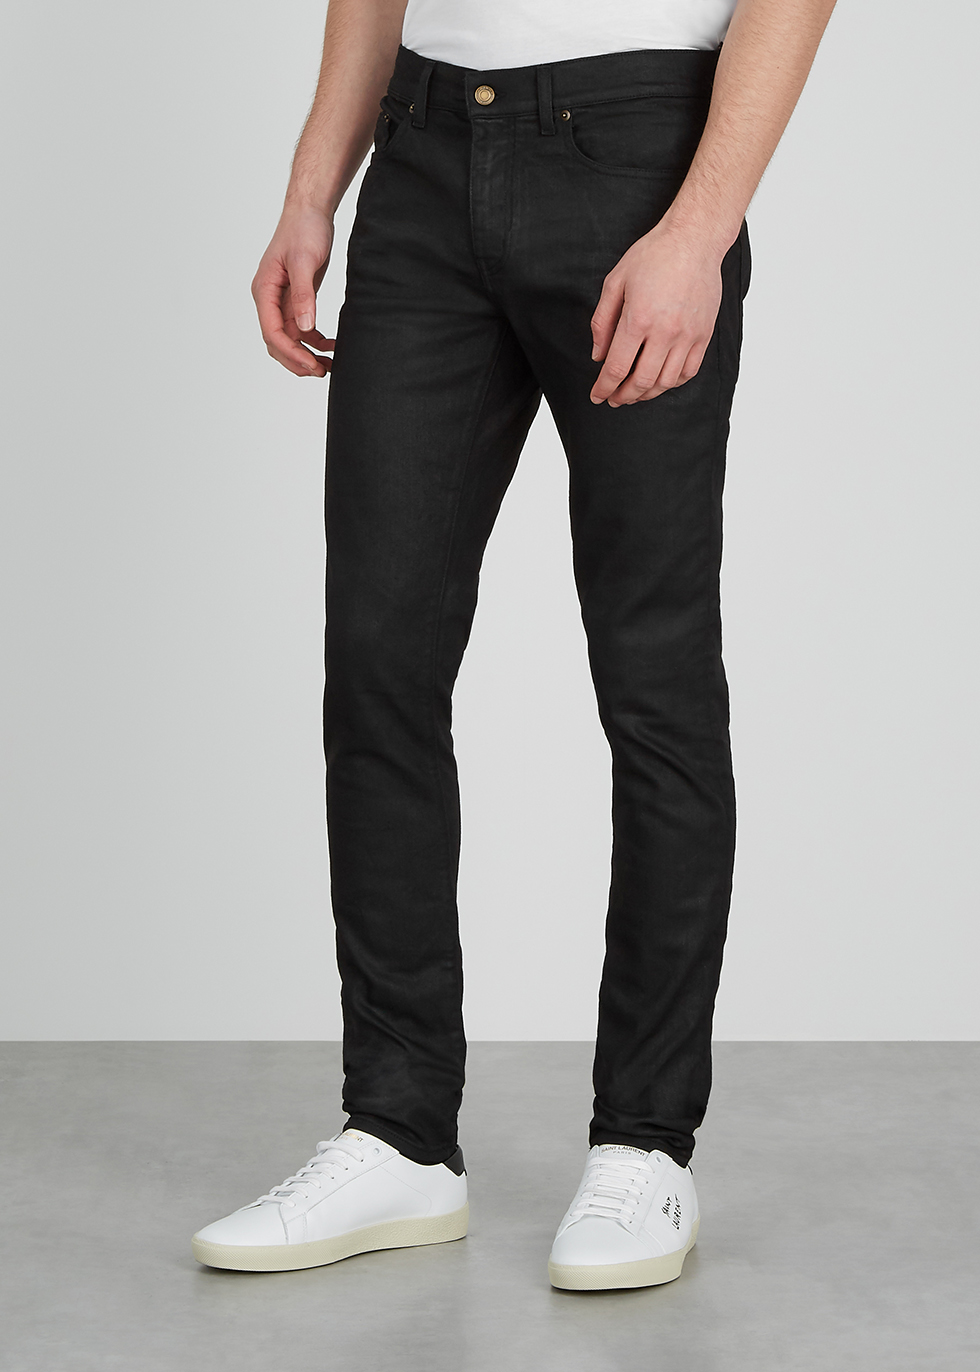 black coated stretch skinny jeans